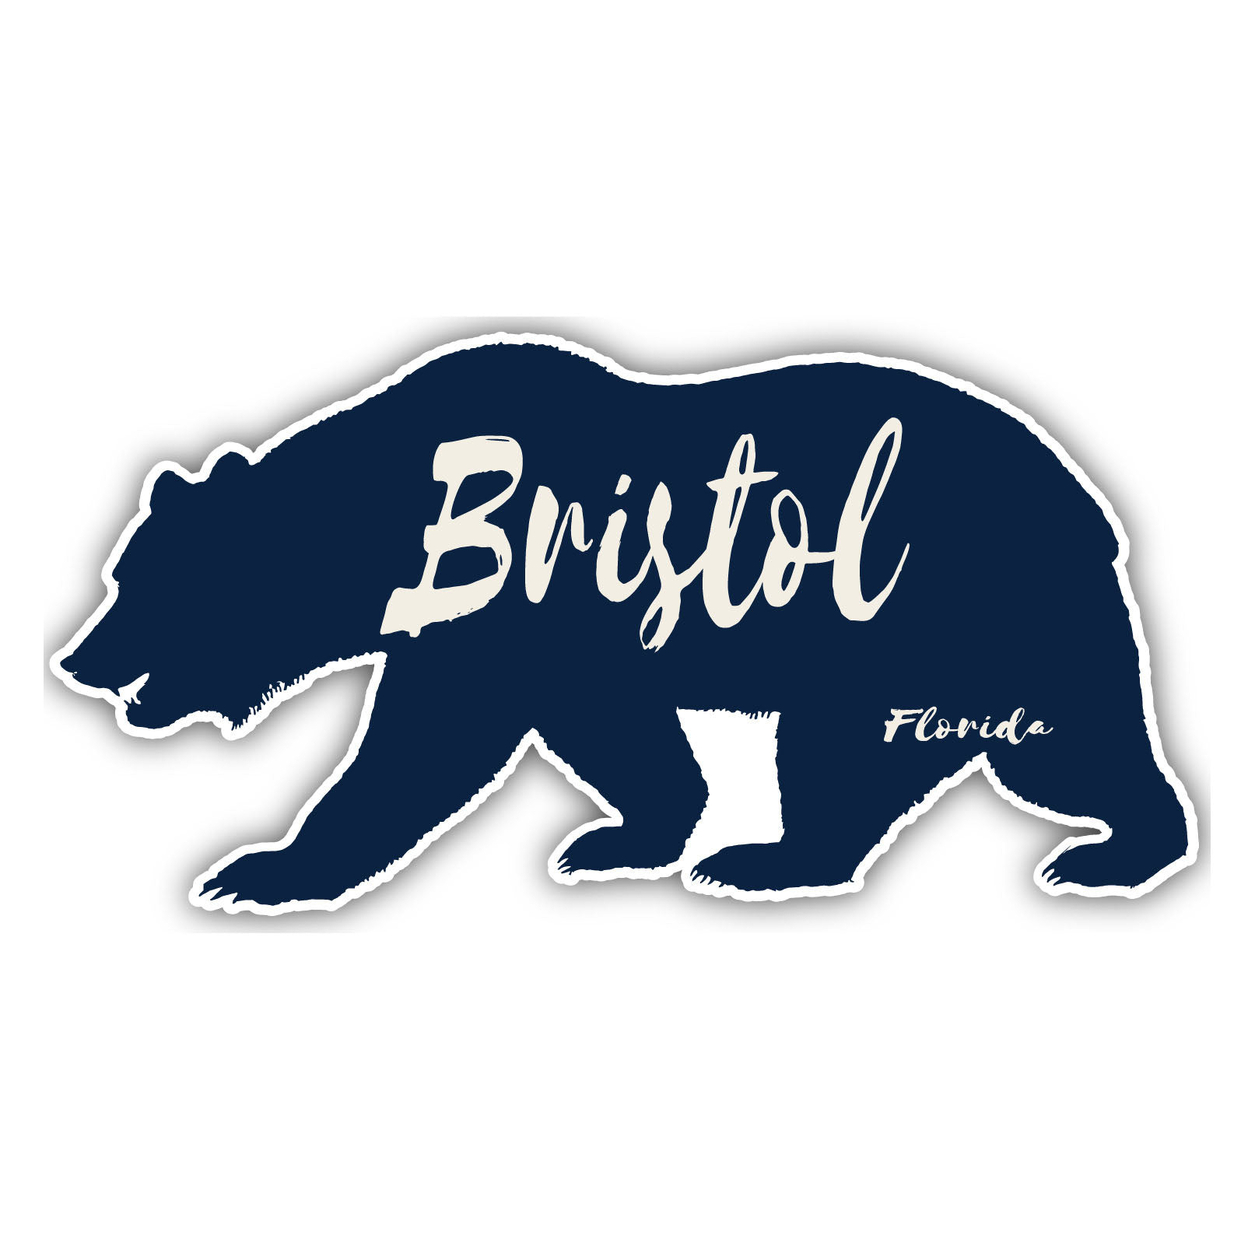 Bristol Florida Souvenir Decorative Stickers (Choose Theme And Size) - Single Unit, 8-Inch, Bear